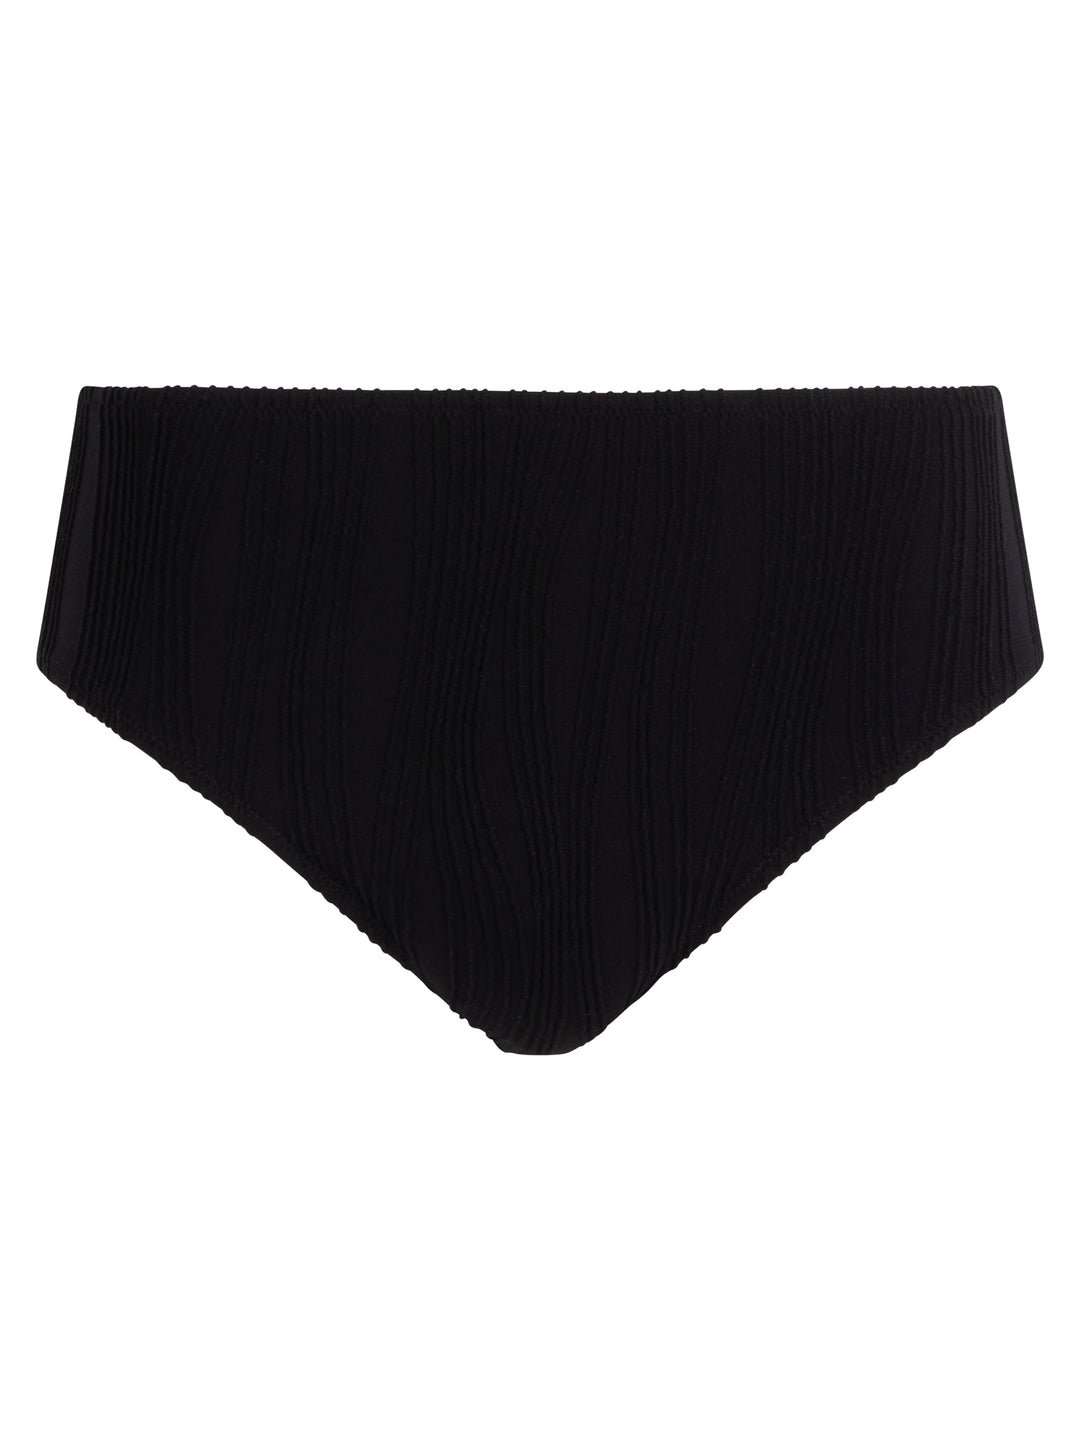 Chantelle Swimwear - Swim One Size Full Brief Black